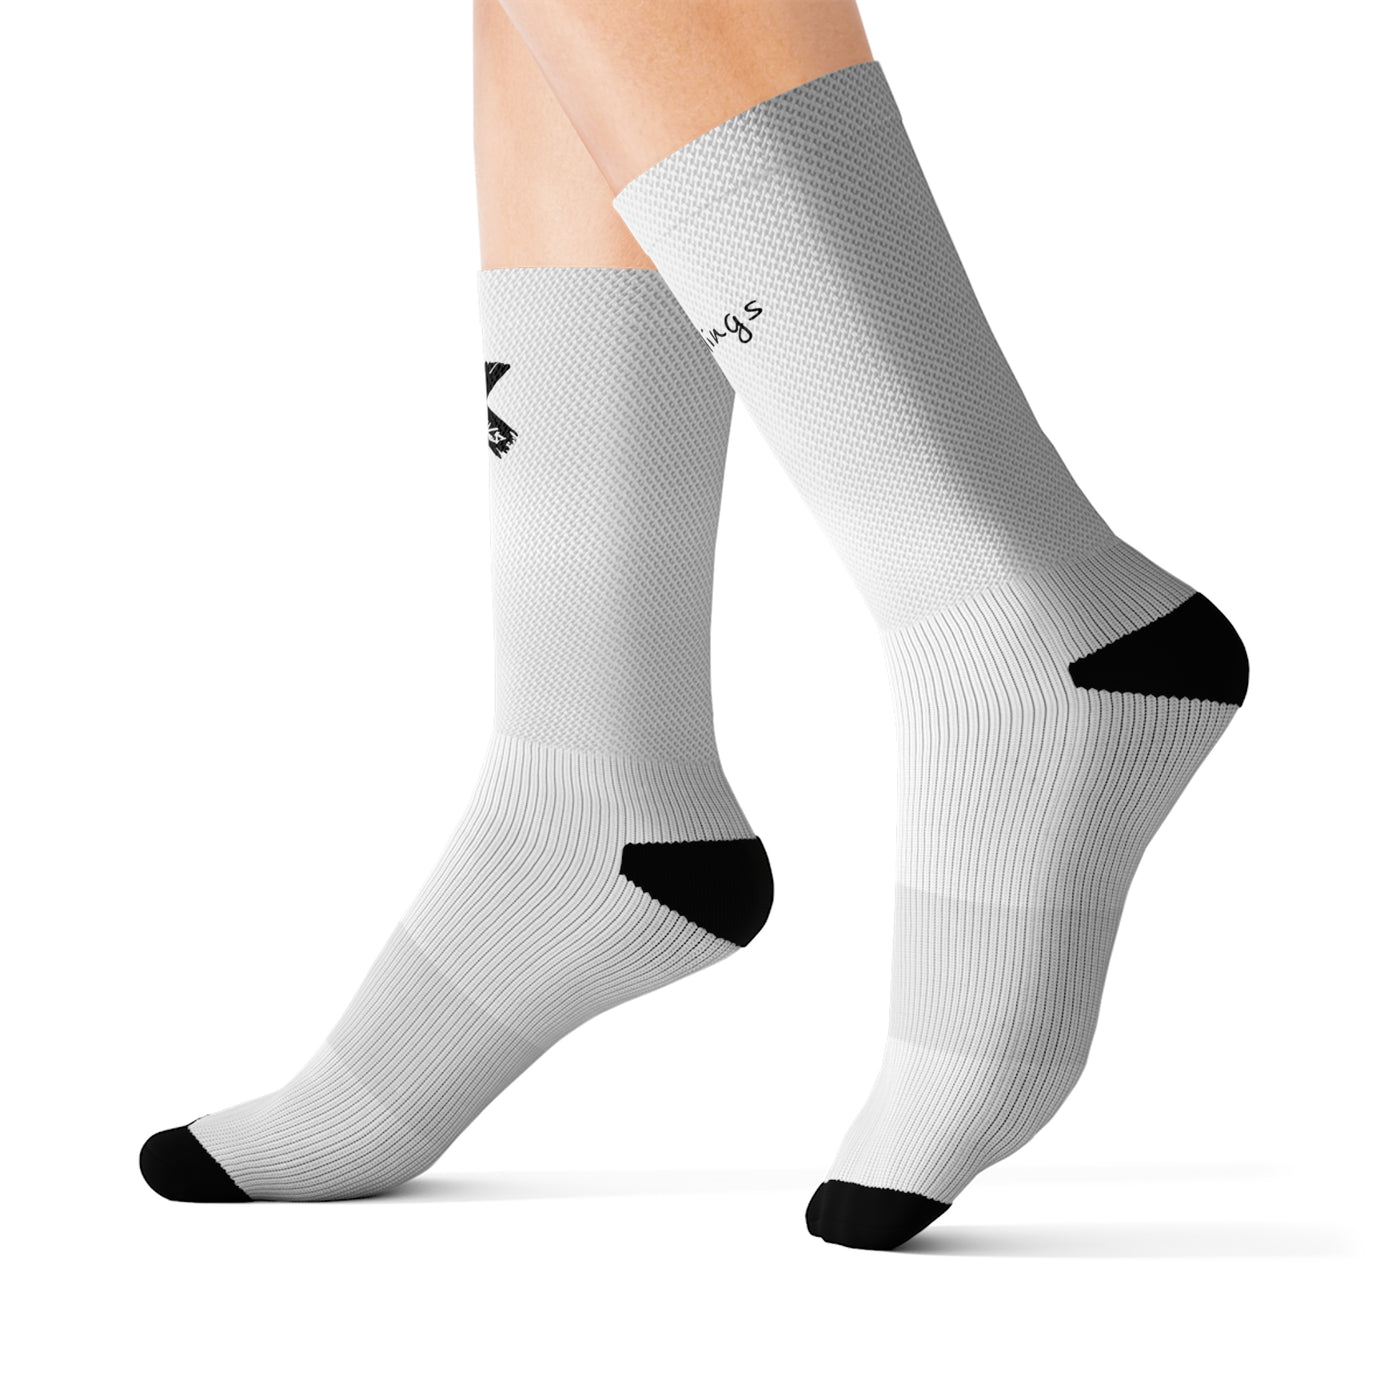 X style socks white